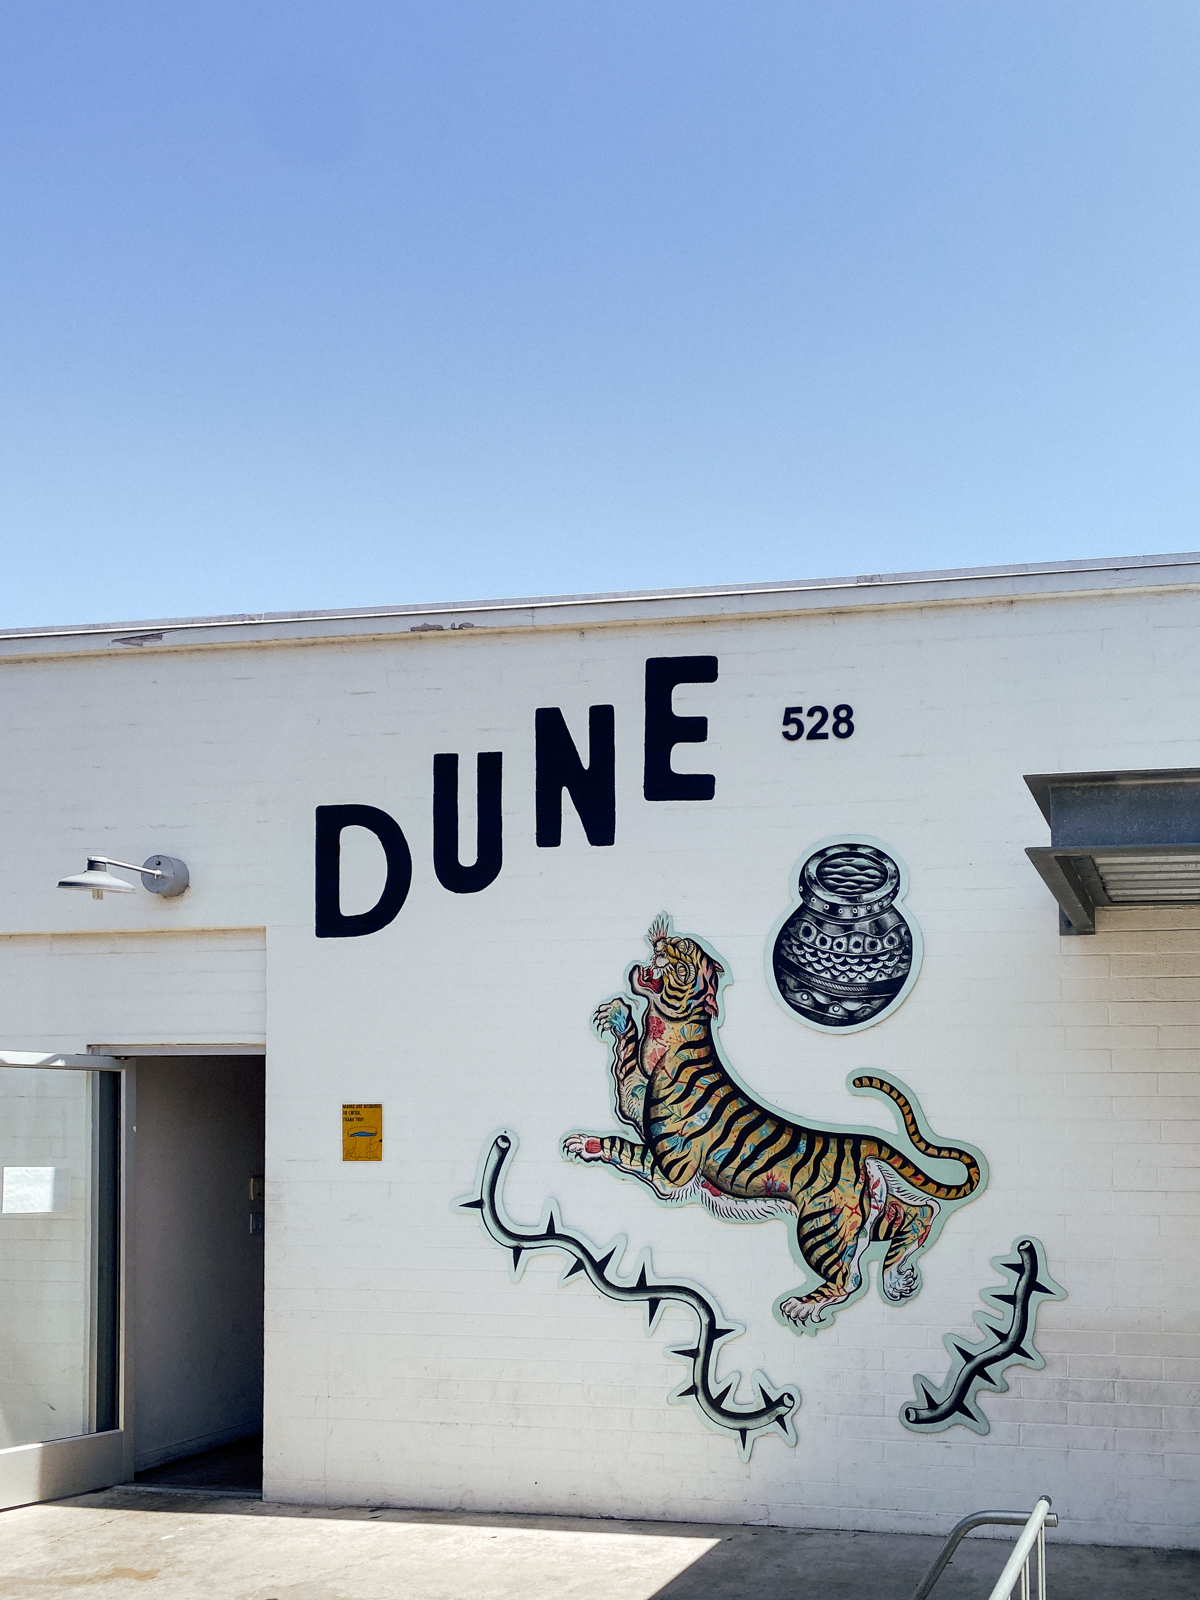 Mural by Michael Matheson (@metalteepee) at Dune Coffee in Santa Barbara California